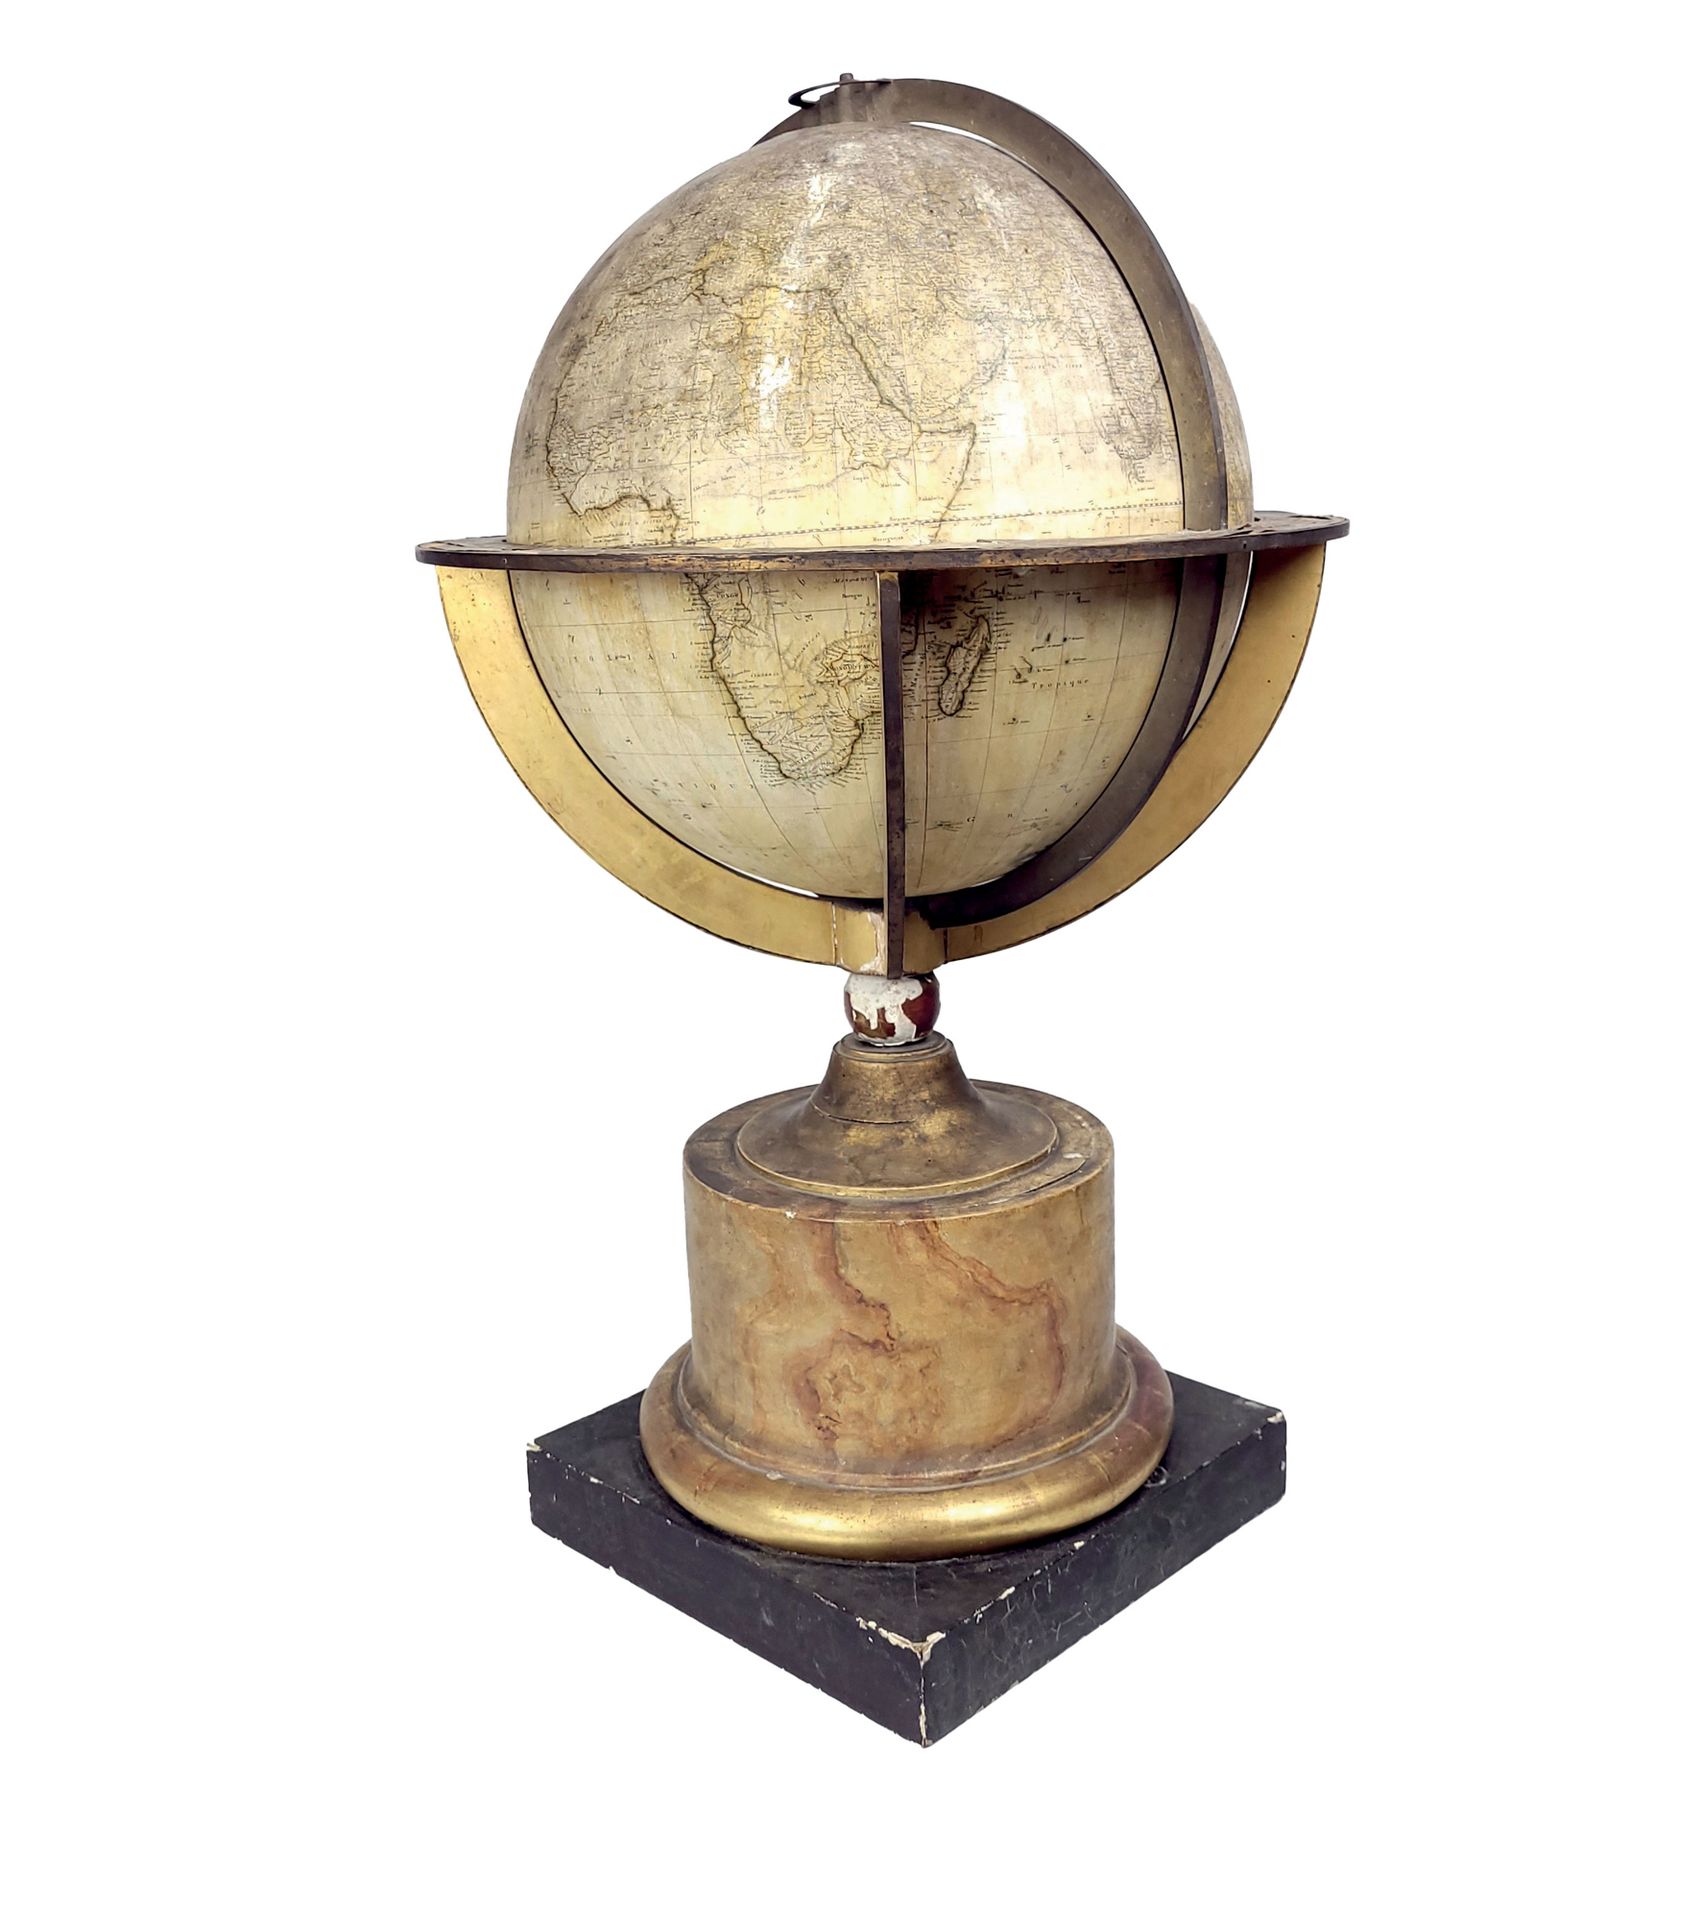 Null 献给罗马国王S.M.的地球仪，上面有地理学家J.B. Poirson的大帝国武器。

"在巴黎，在作者那里，Estrapade广场N°34。

地球仪&hellip;